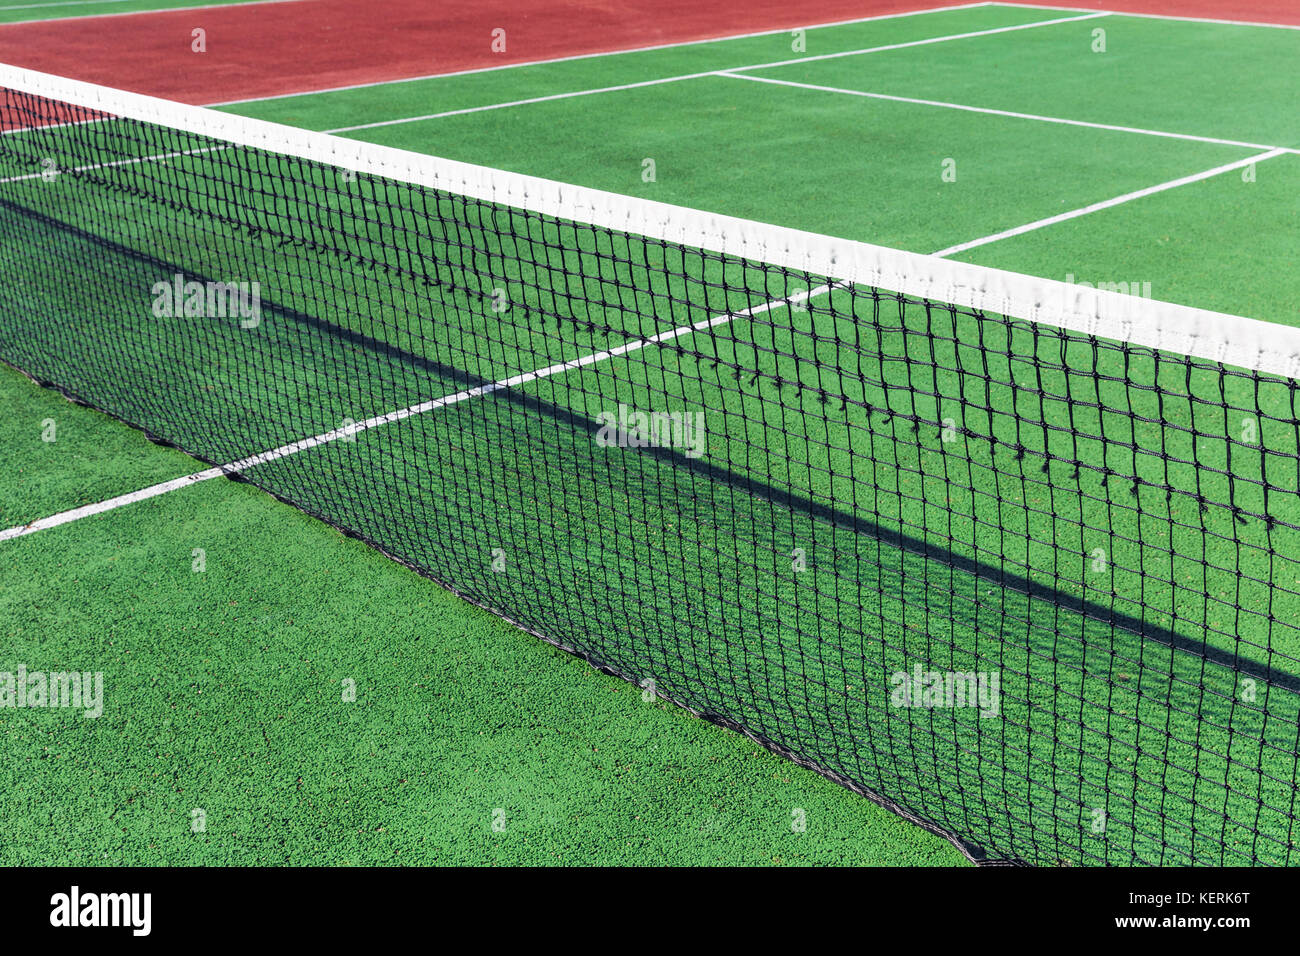 Tennis hard court net Stock Photo